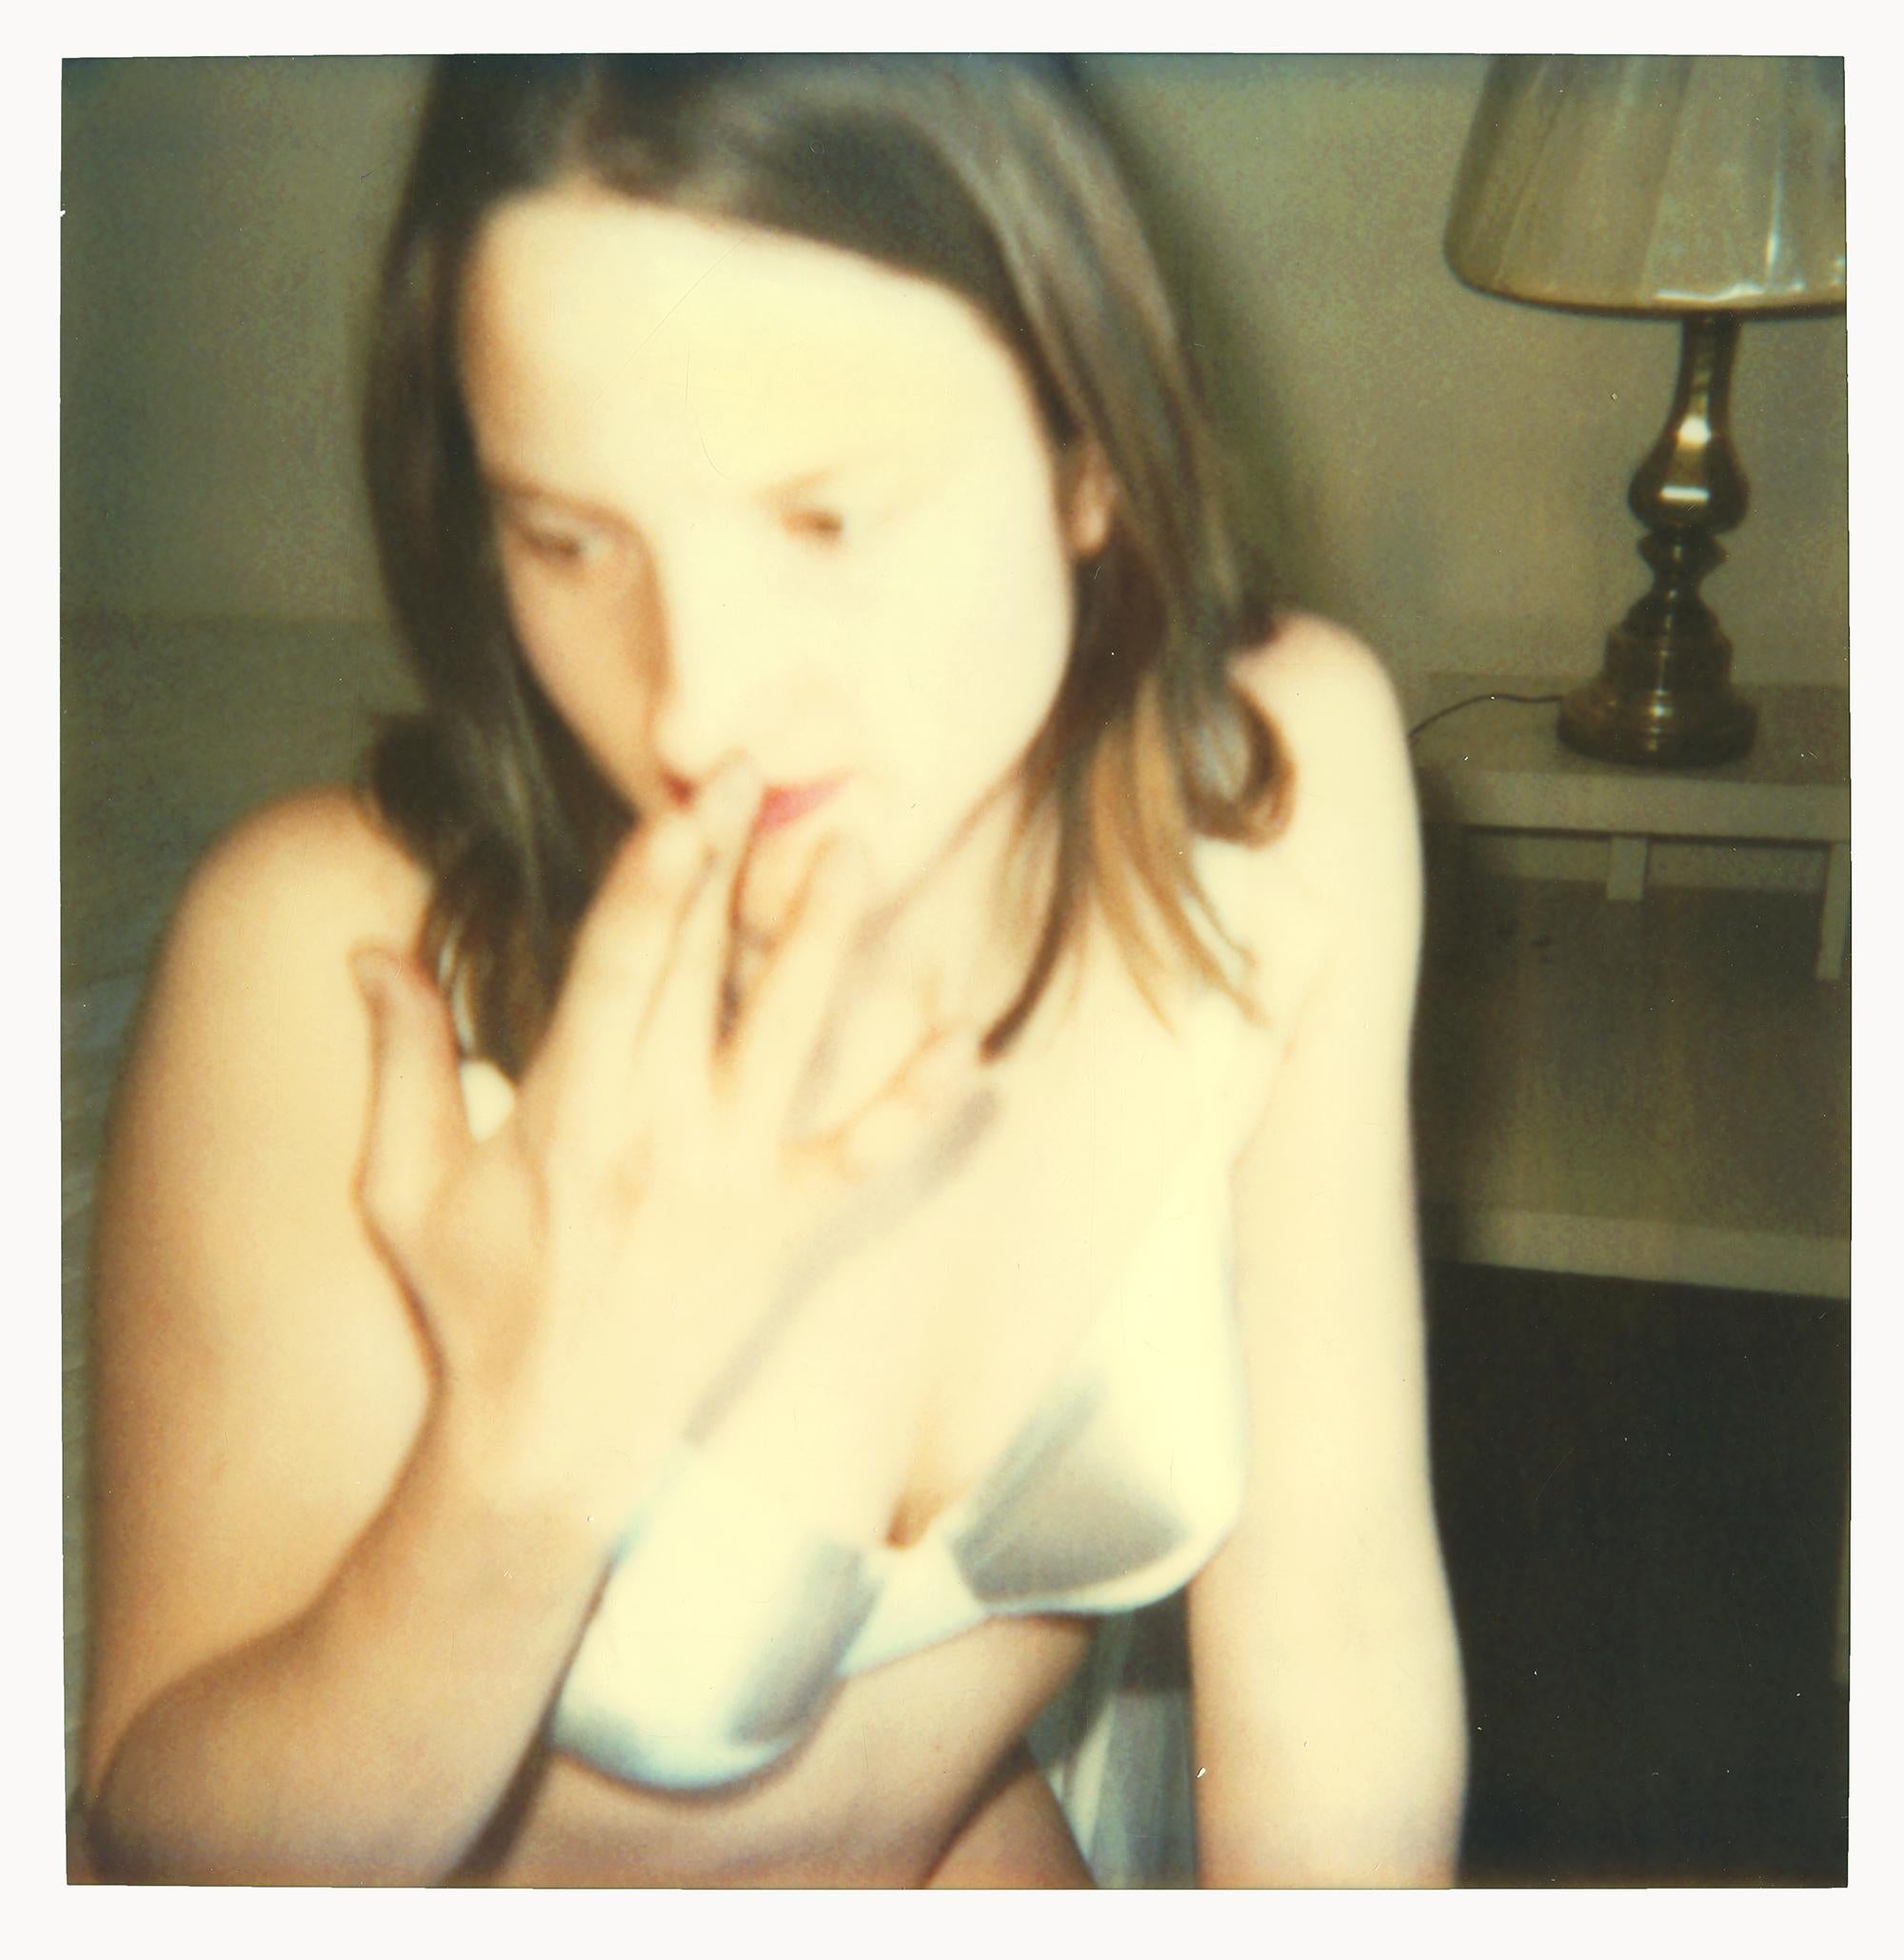 Stefanie Schneider Color Photograph - Untitled (29 Palms, CA) - analog, Polaroid, Contemporary